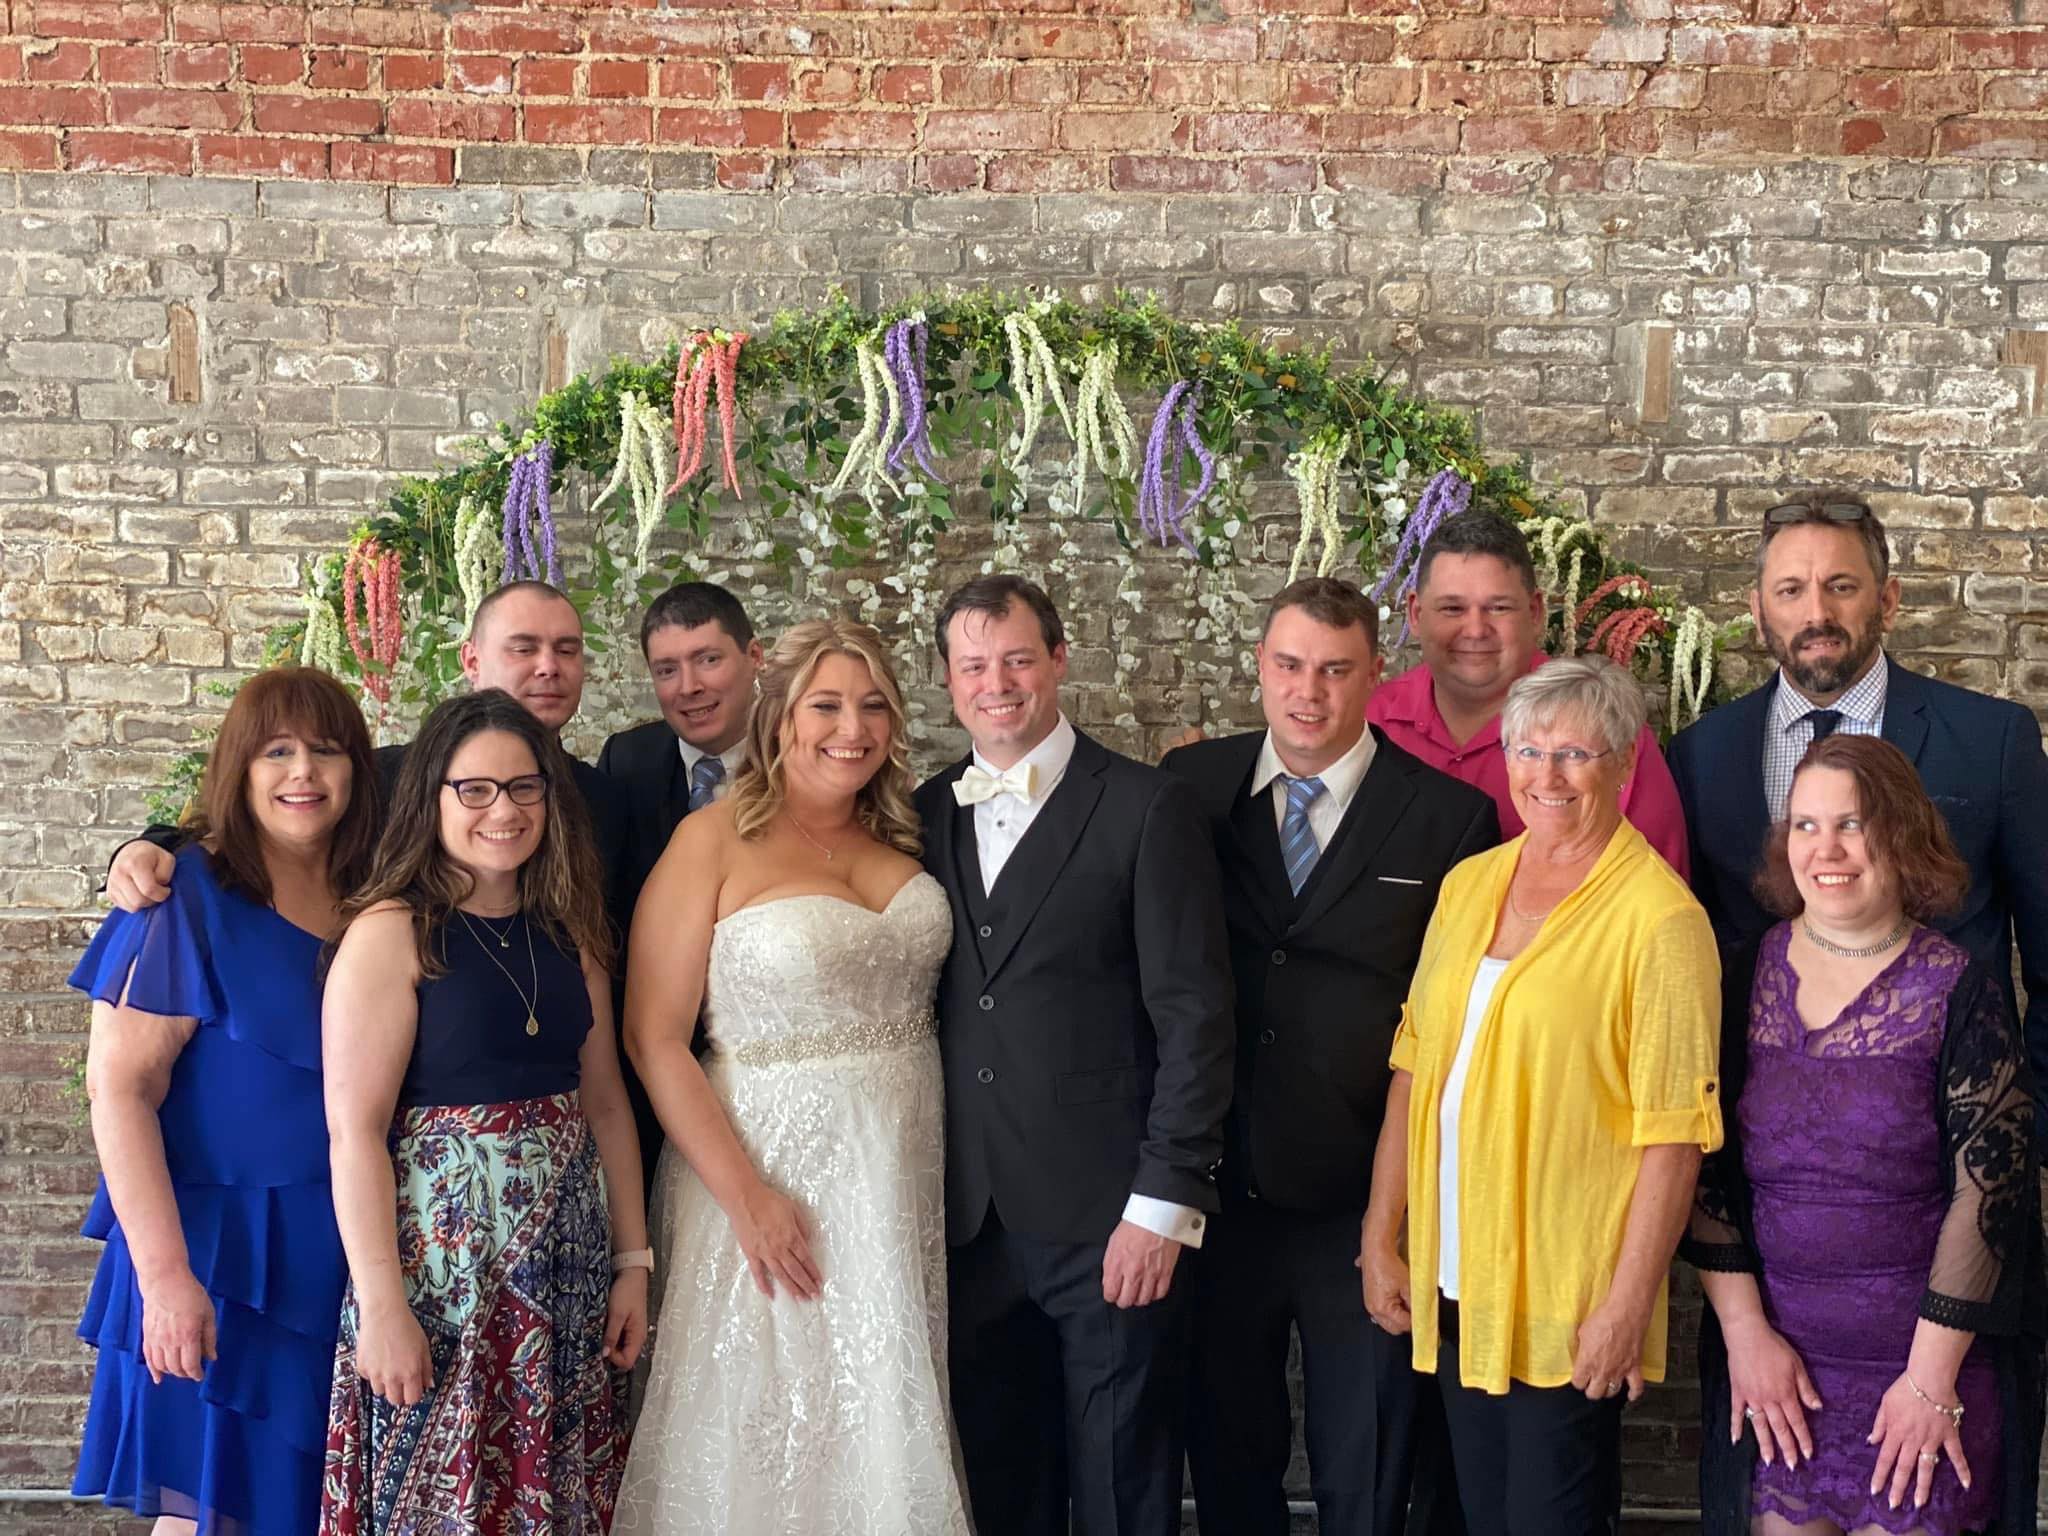 Meyer family at Jon's wedding